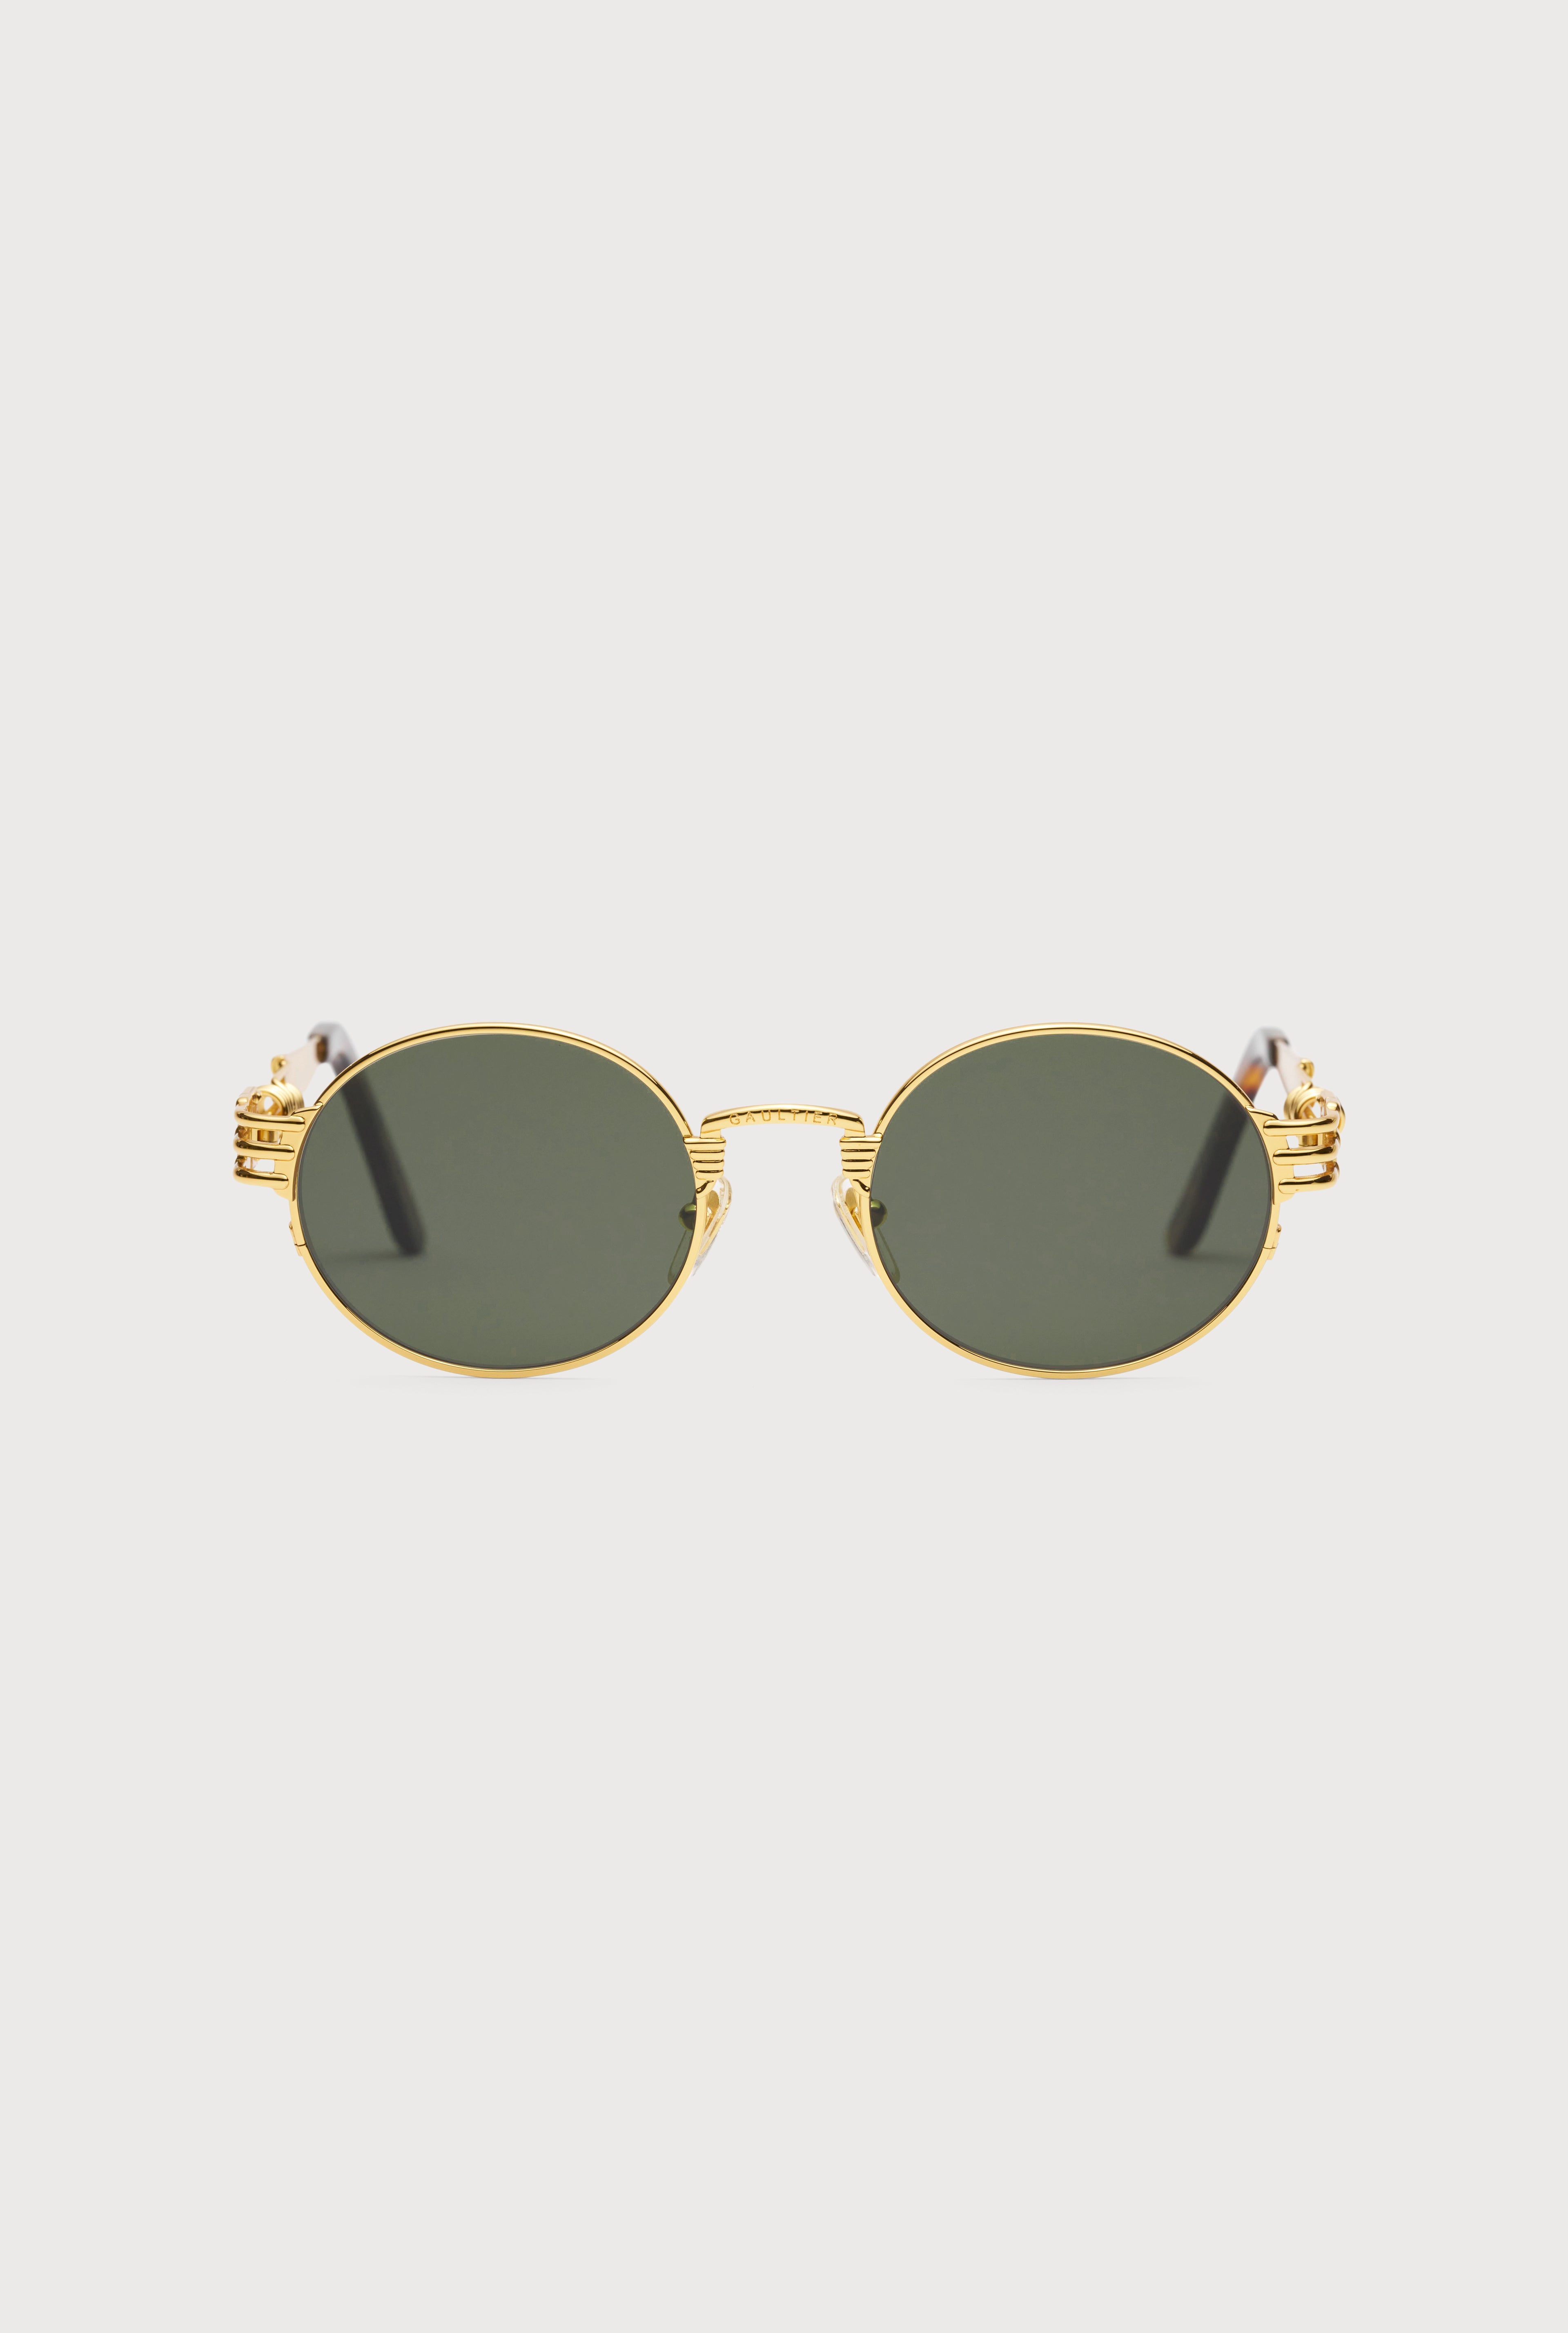 The Gold 56-6106 Sunglasses